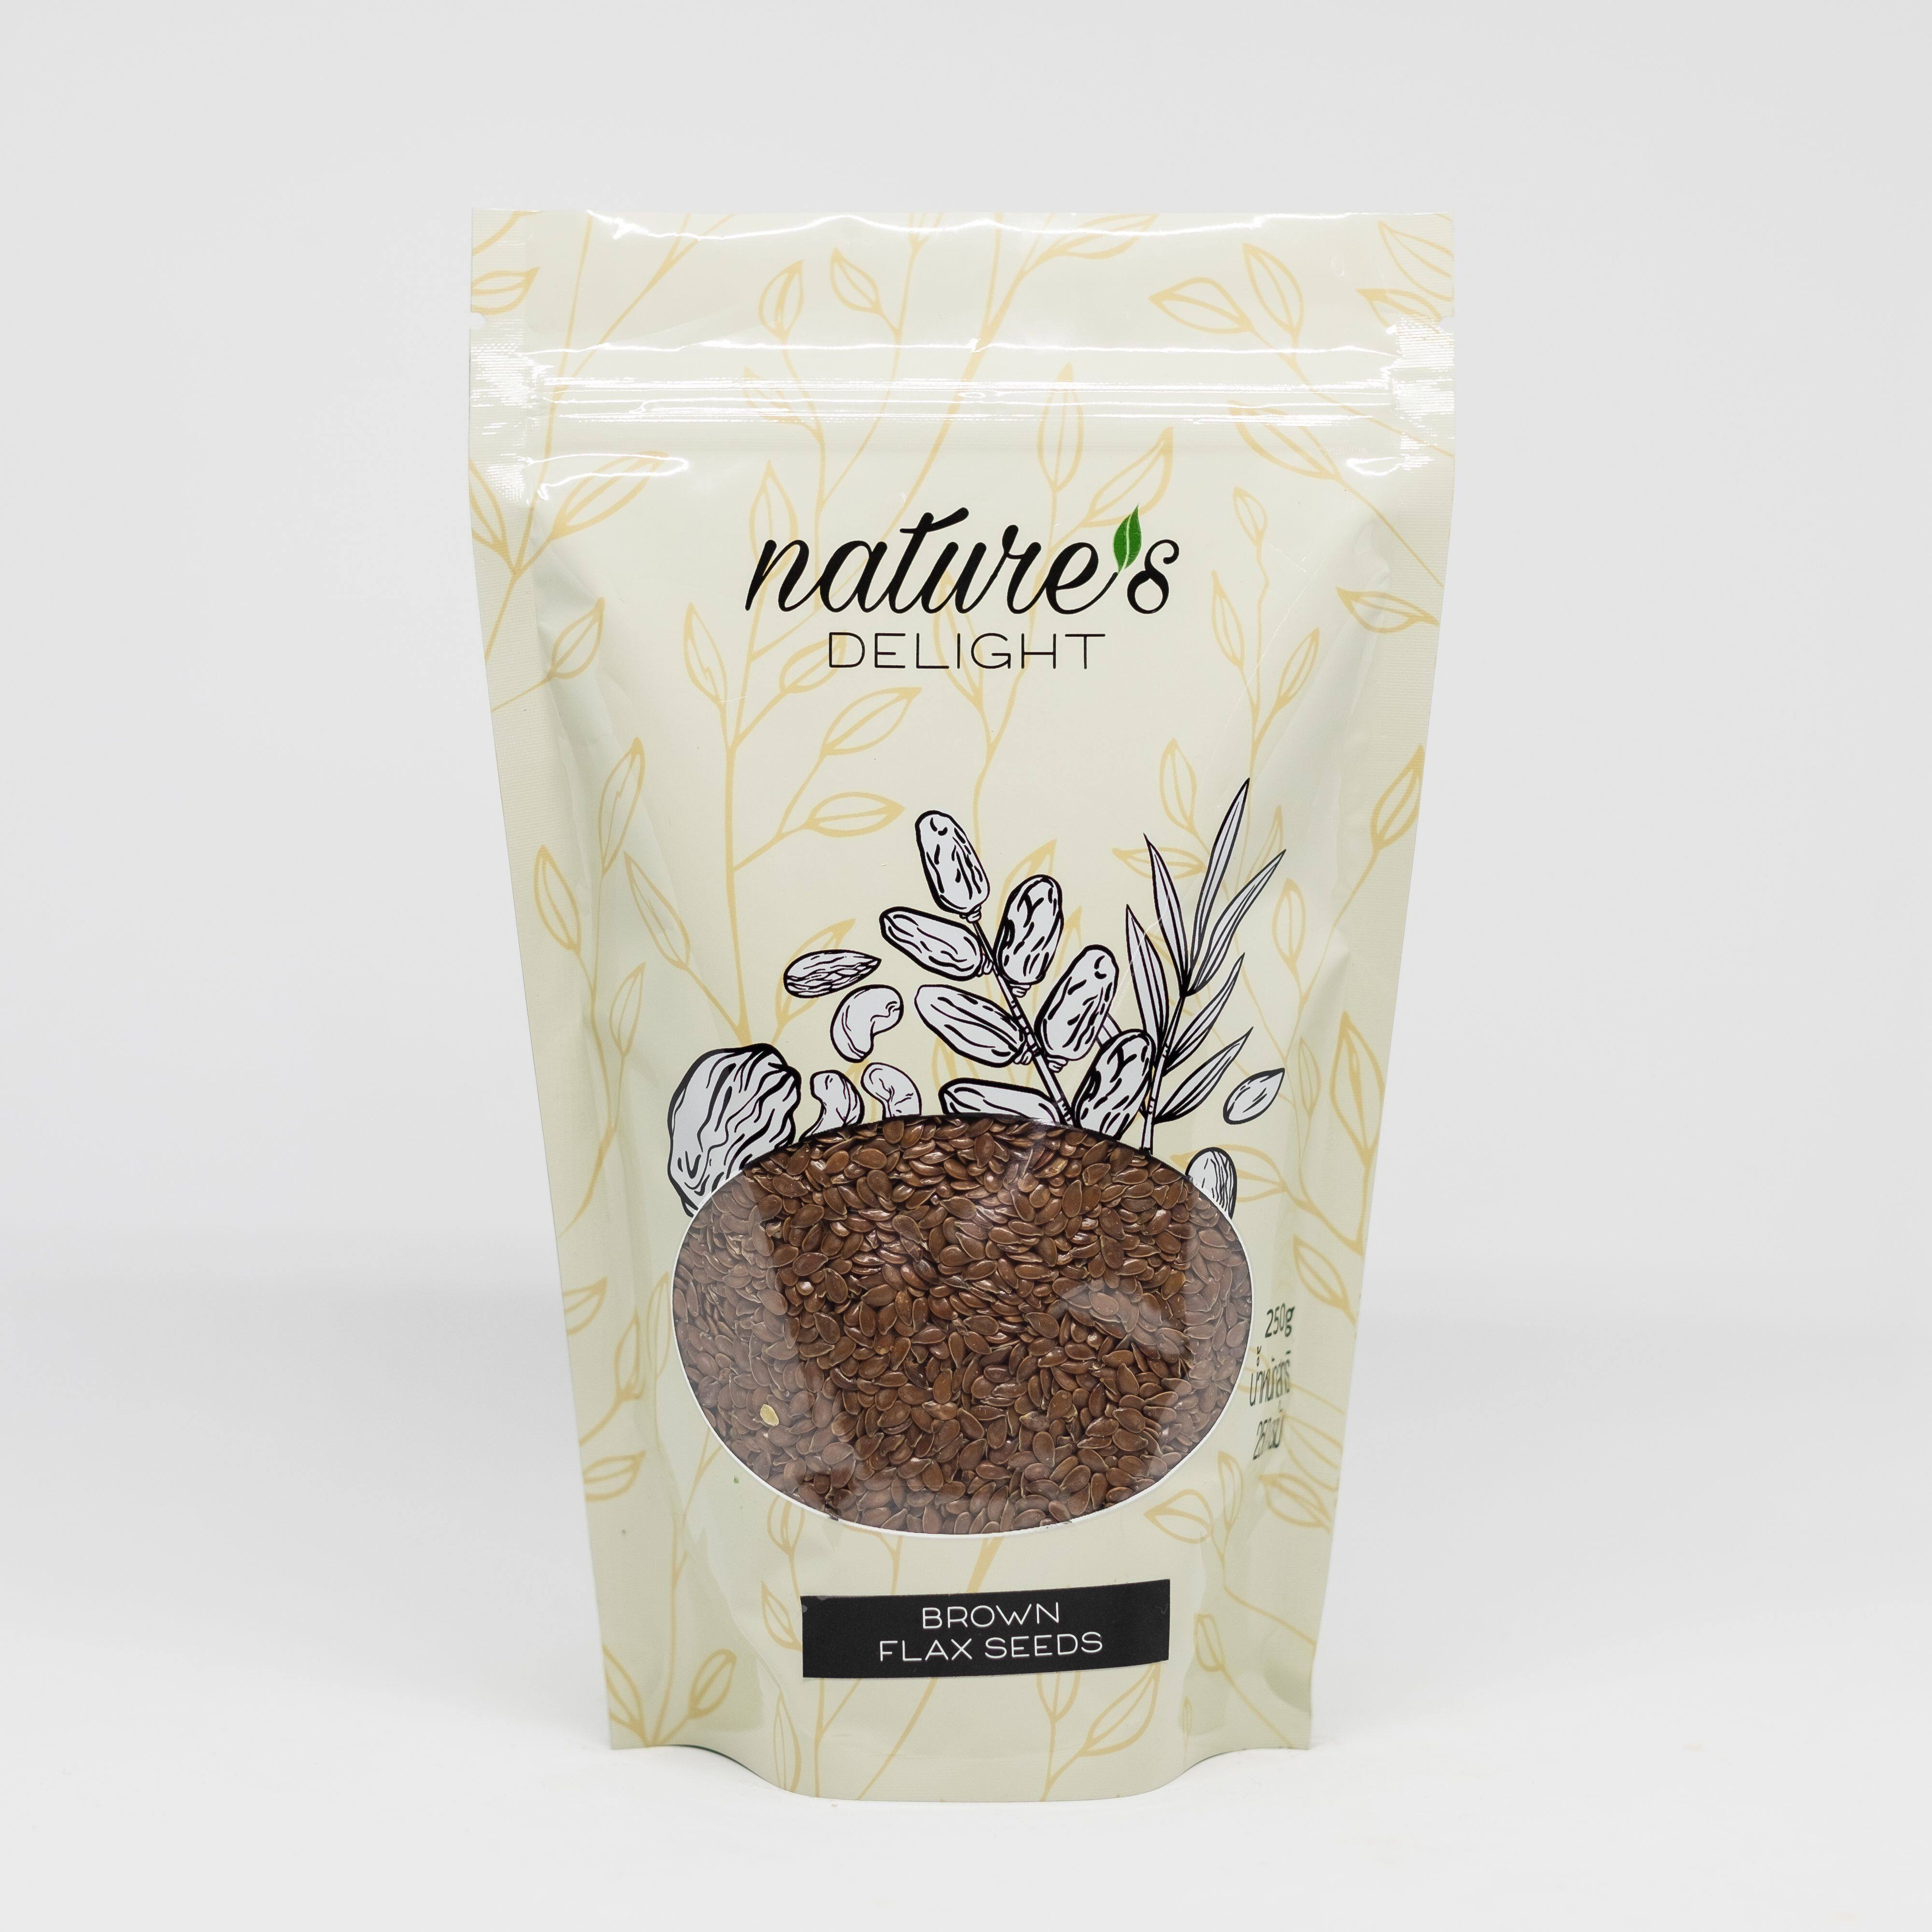 Nature's Delight Brown Flax Seeds 250g/ เมล็ดแฟล็กสีน้ำตาล 250 กรัม ตราเนเจอร์ส ดีไลท์